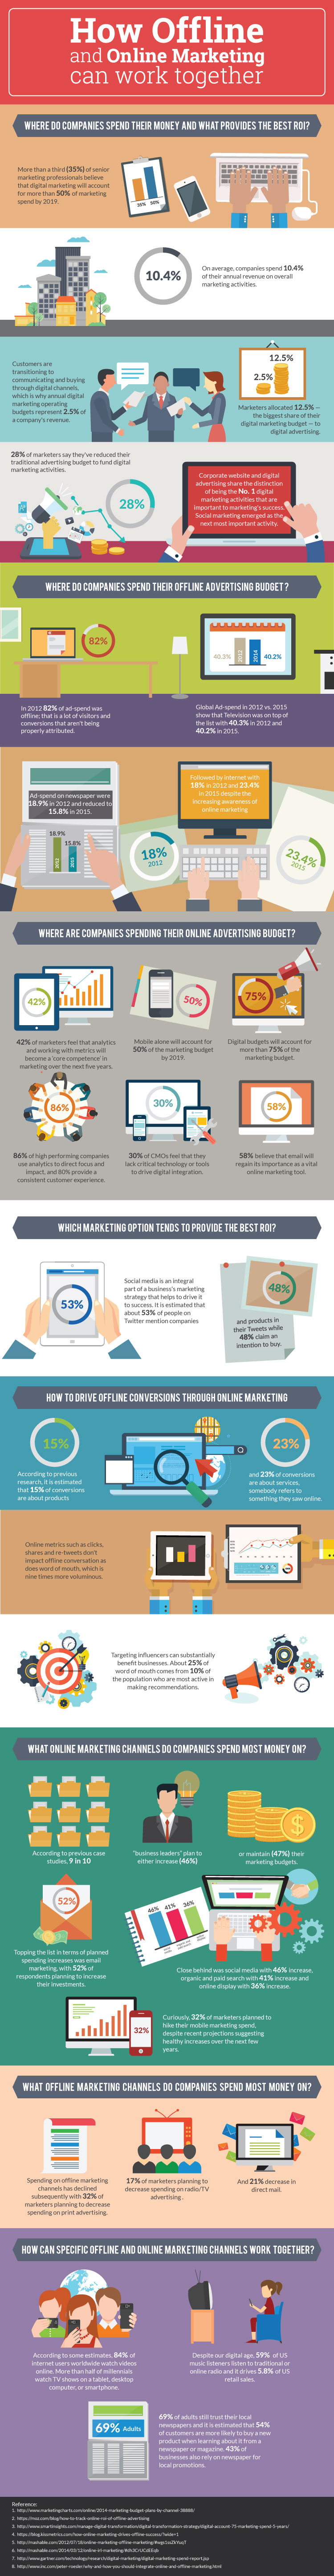 offline-and-online-marketing-infographic.jpg